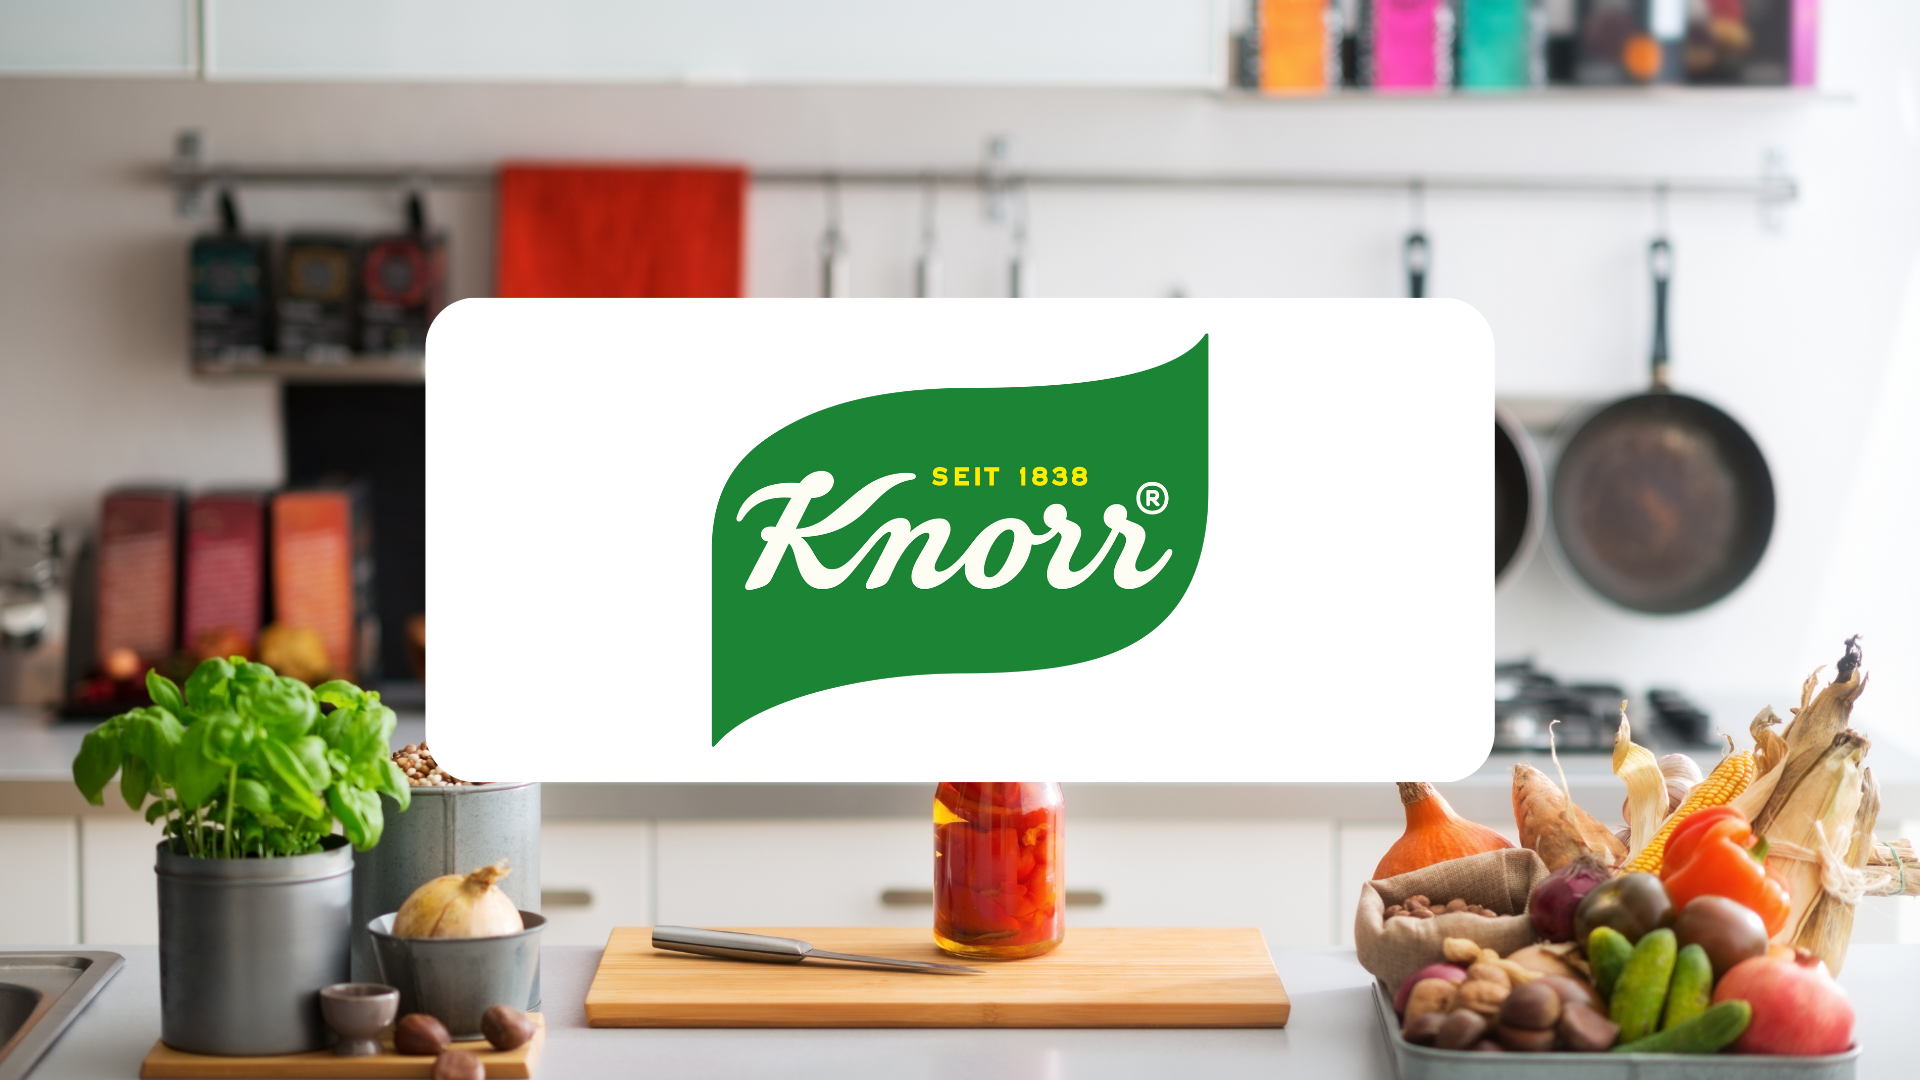 Showcasing Knorr's halal cooking broths